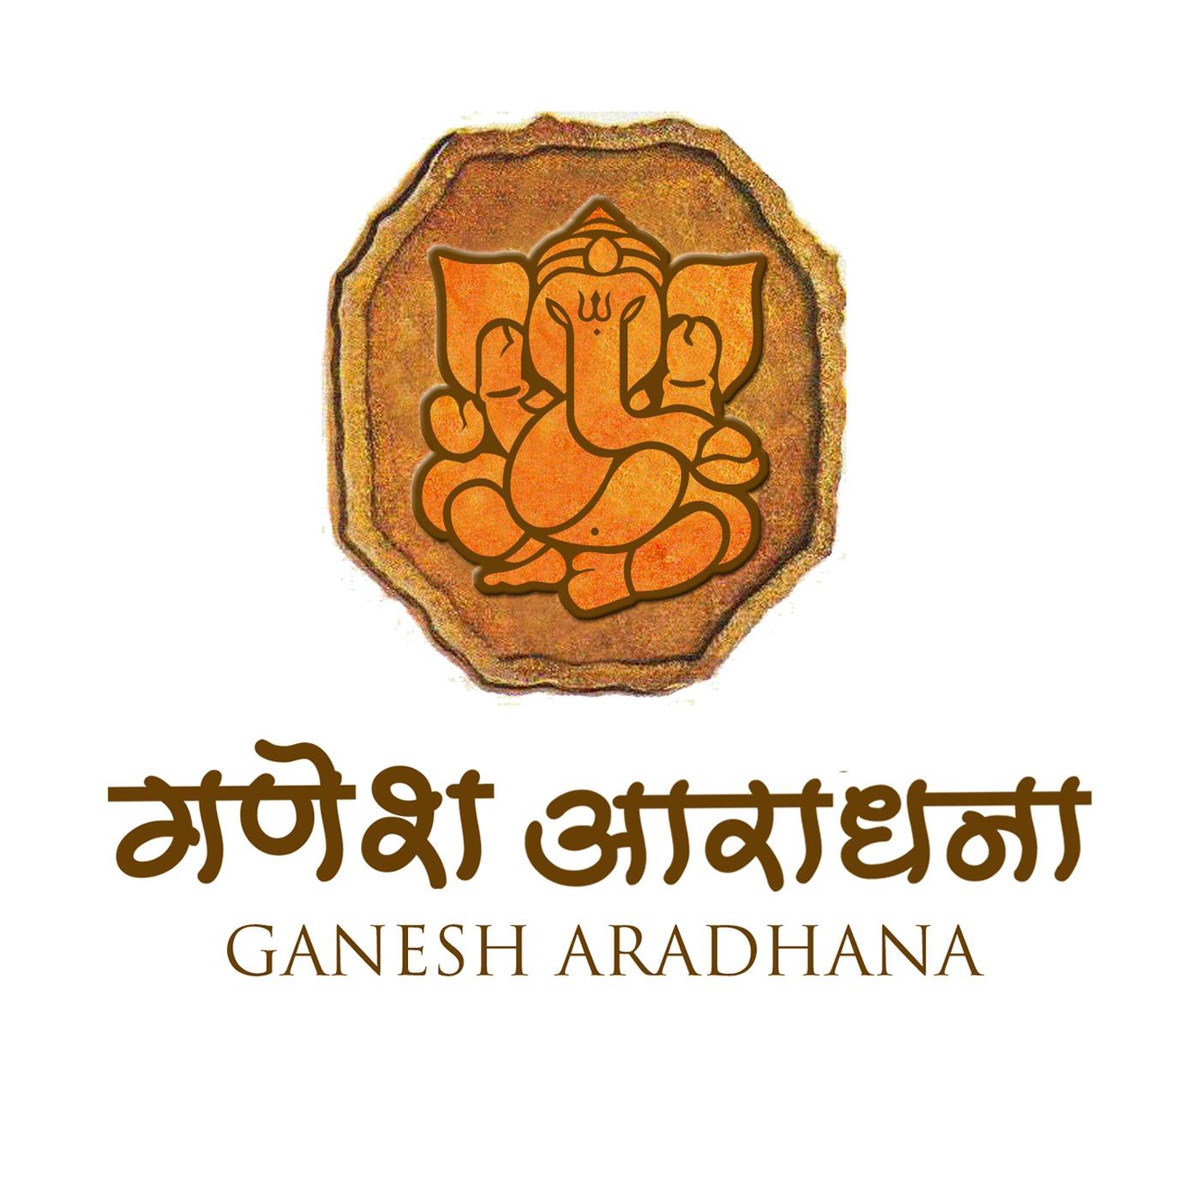 Shri Ganesh Mahamantra